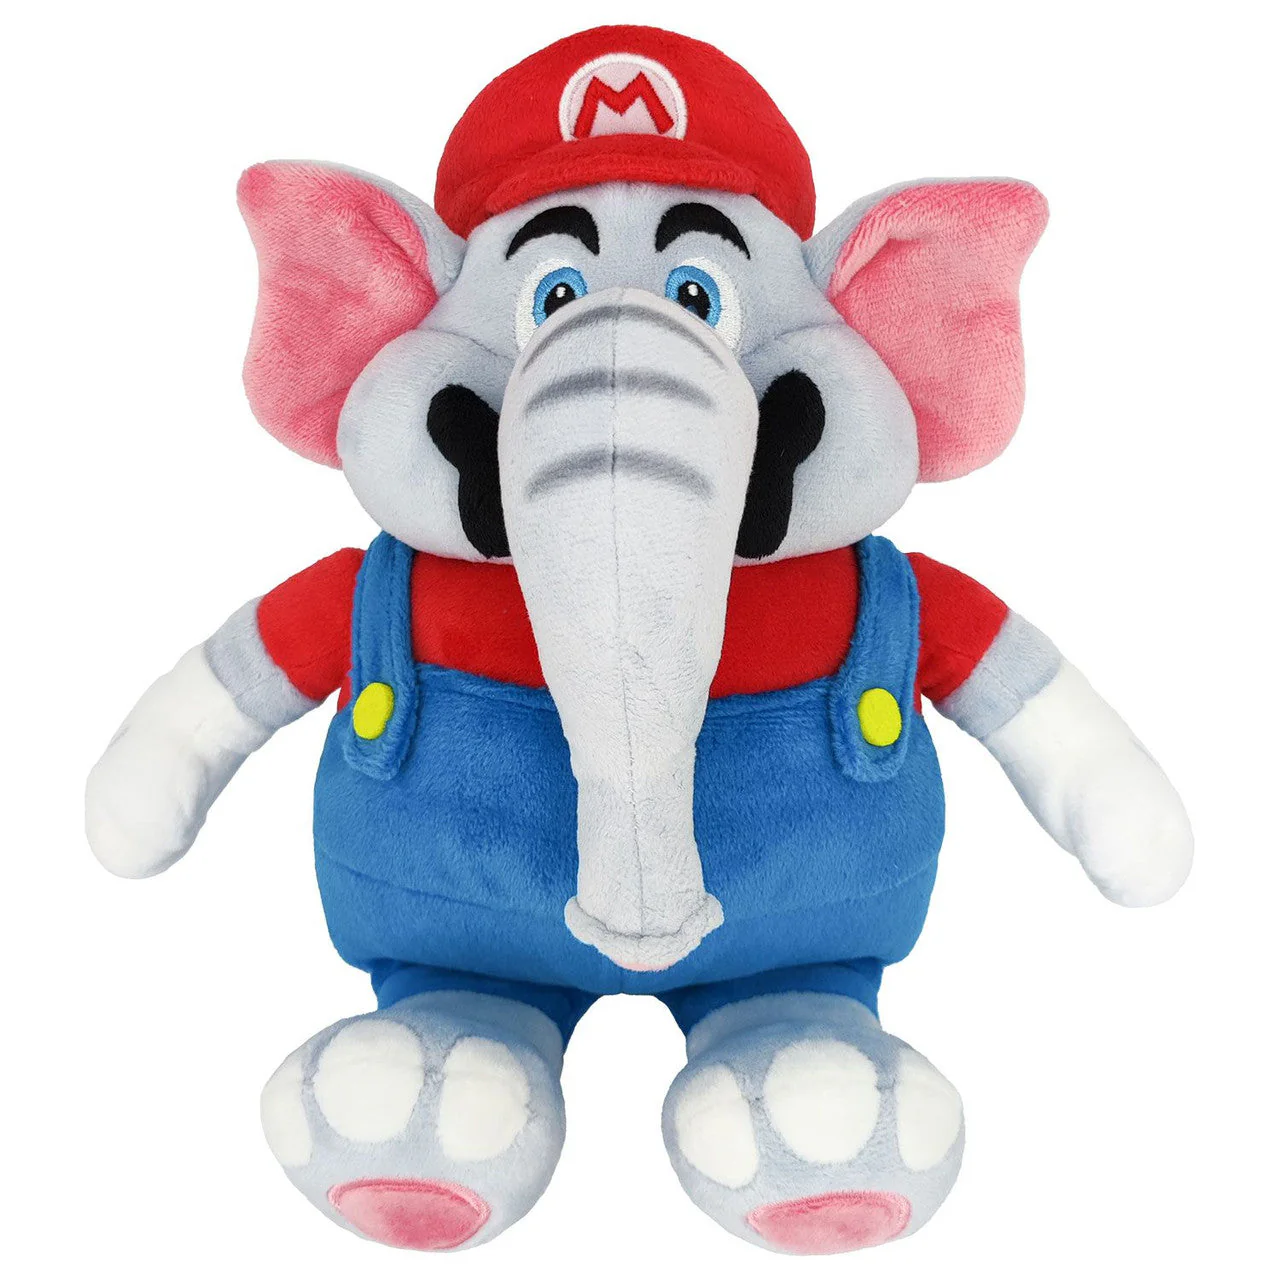 Little Buddy - 10" Elephant Mario Plush (A12)